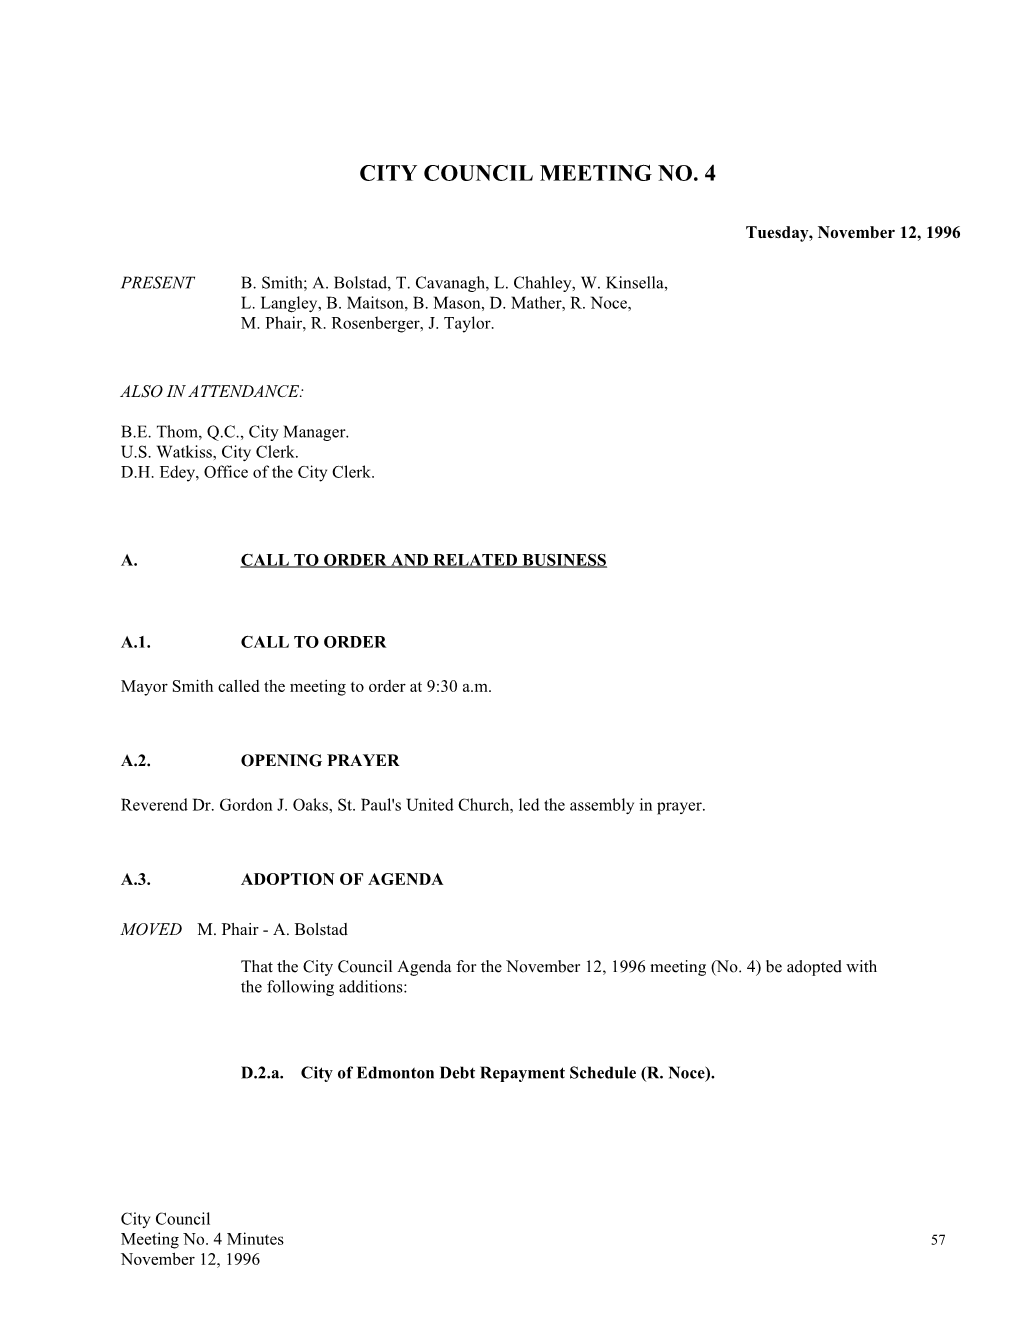 City Council Meeting No. 4